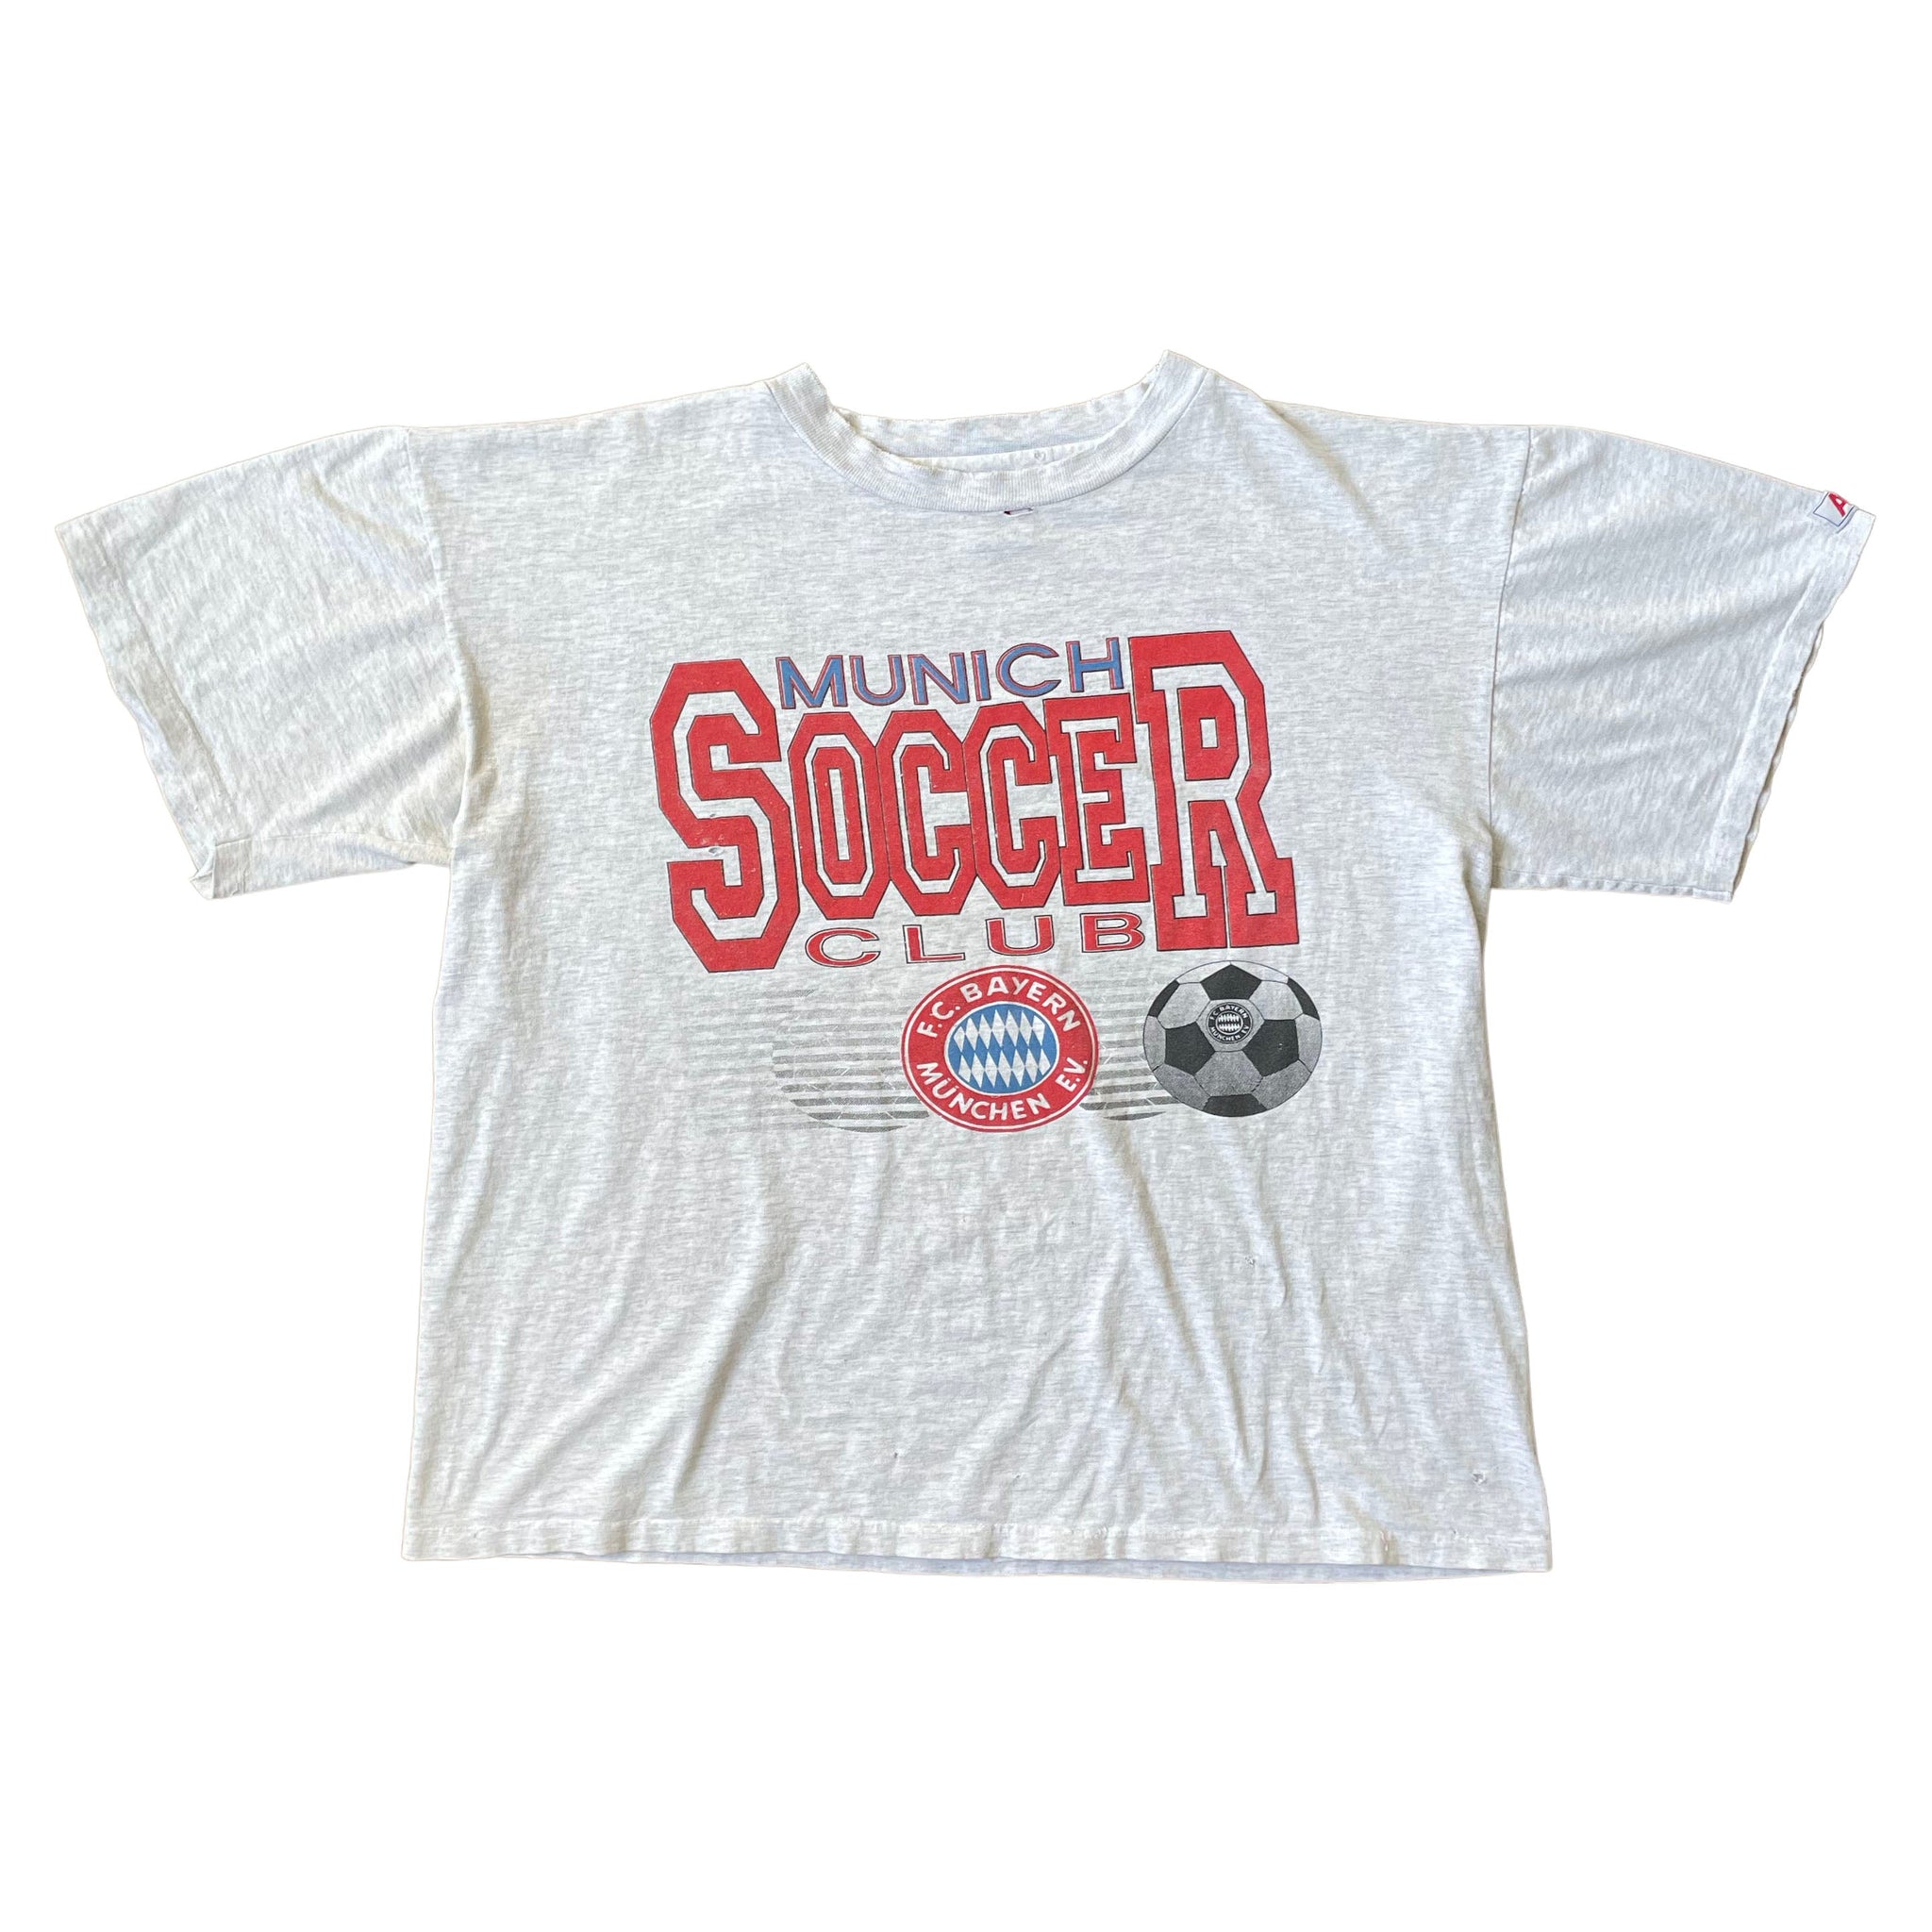 Munich Soccer Club T-Shirt - L